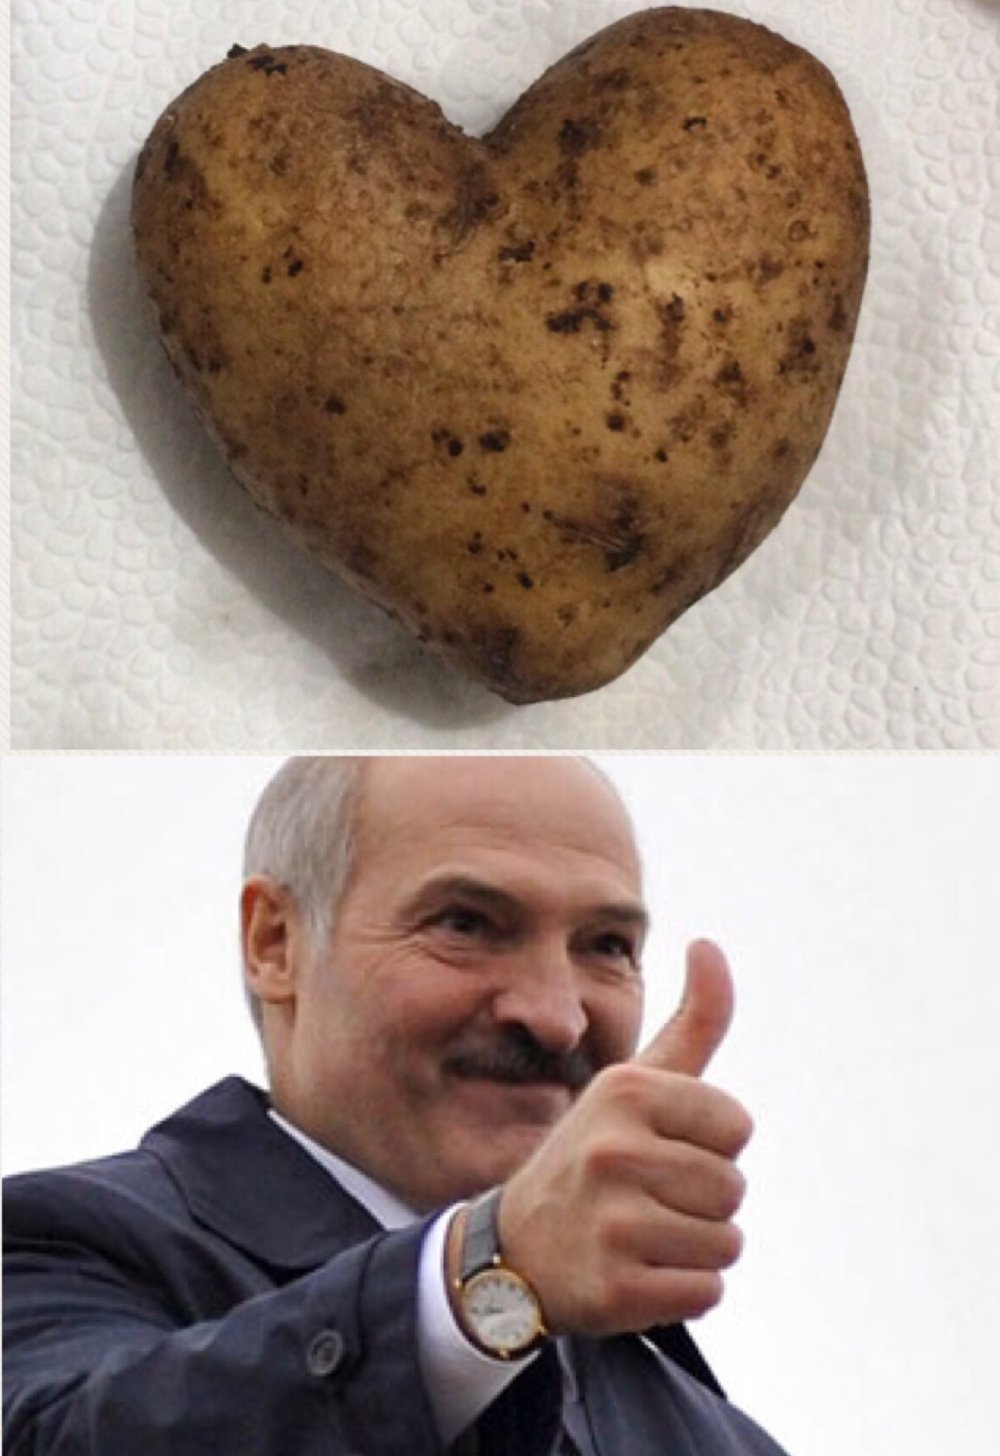 Лукашенко картоха